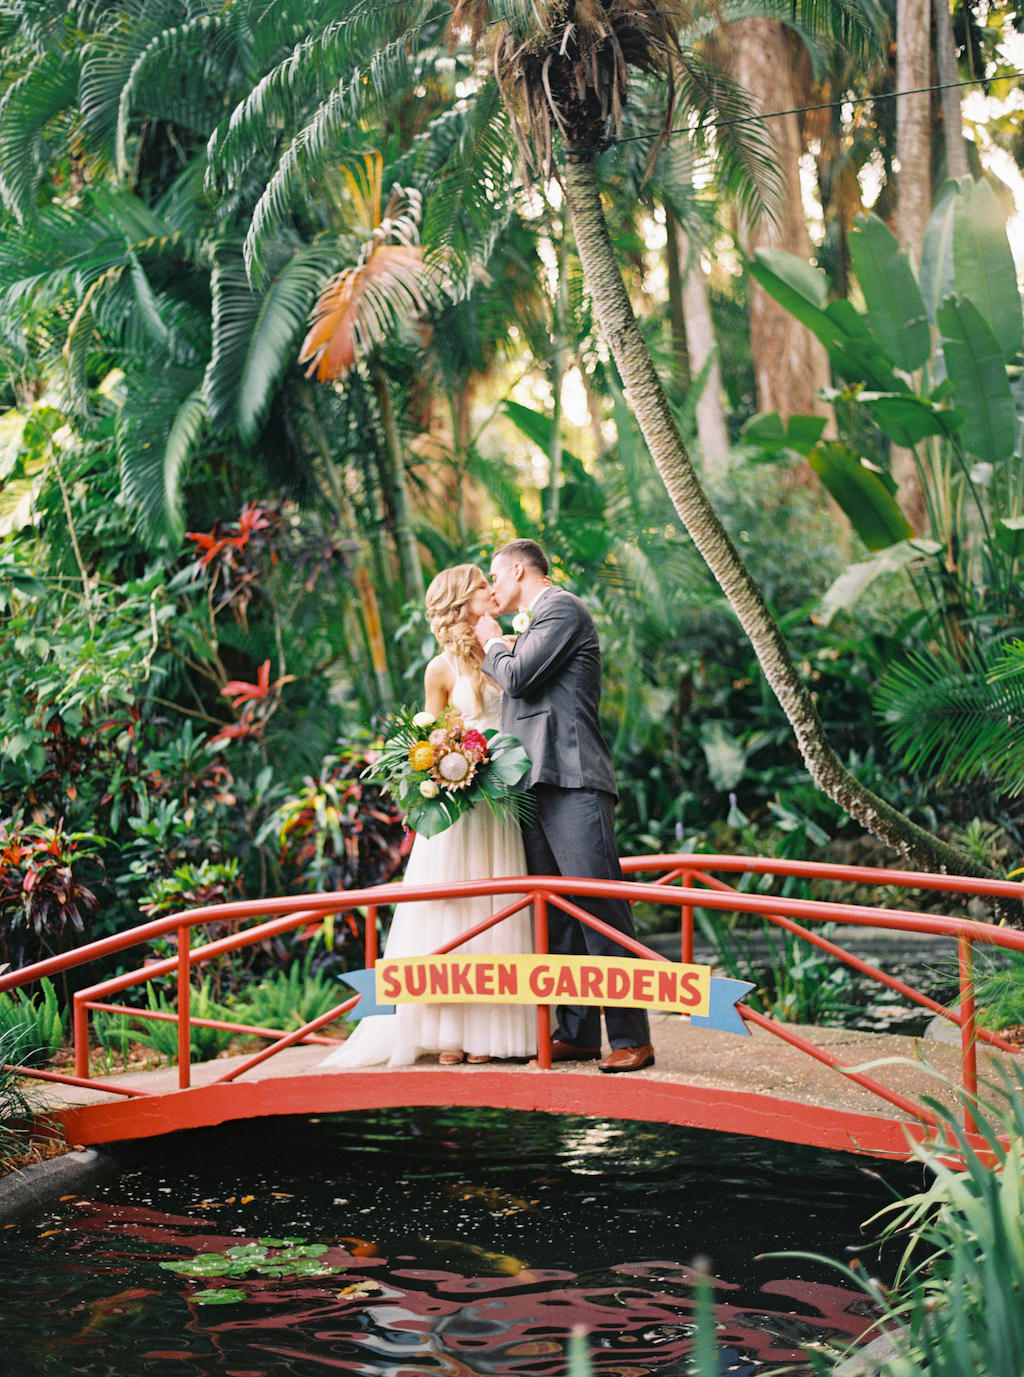 Tropical Outdoor Inspired Bride and Groom Wedding Portrait on Bridge | Outdoor St. Petersburg Wedding Venue Sunken Gardens | Planner Southern Glam Events and Weddings